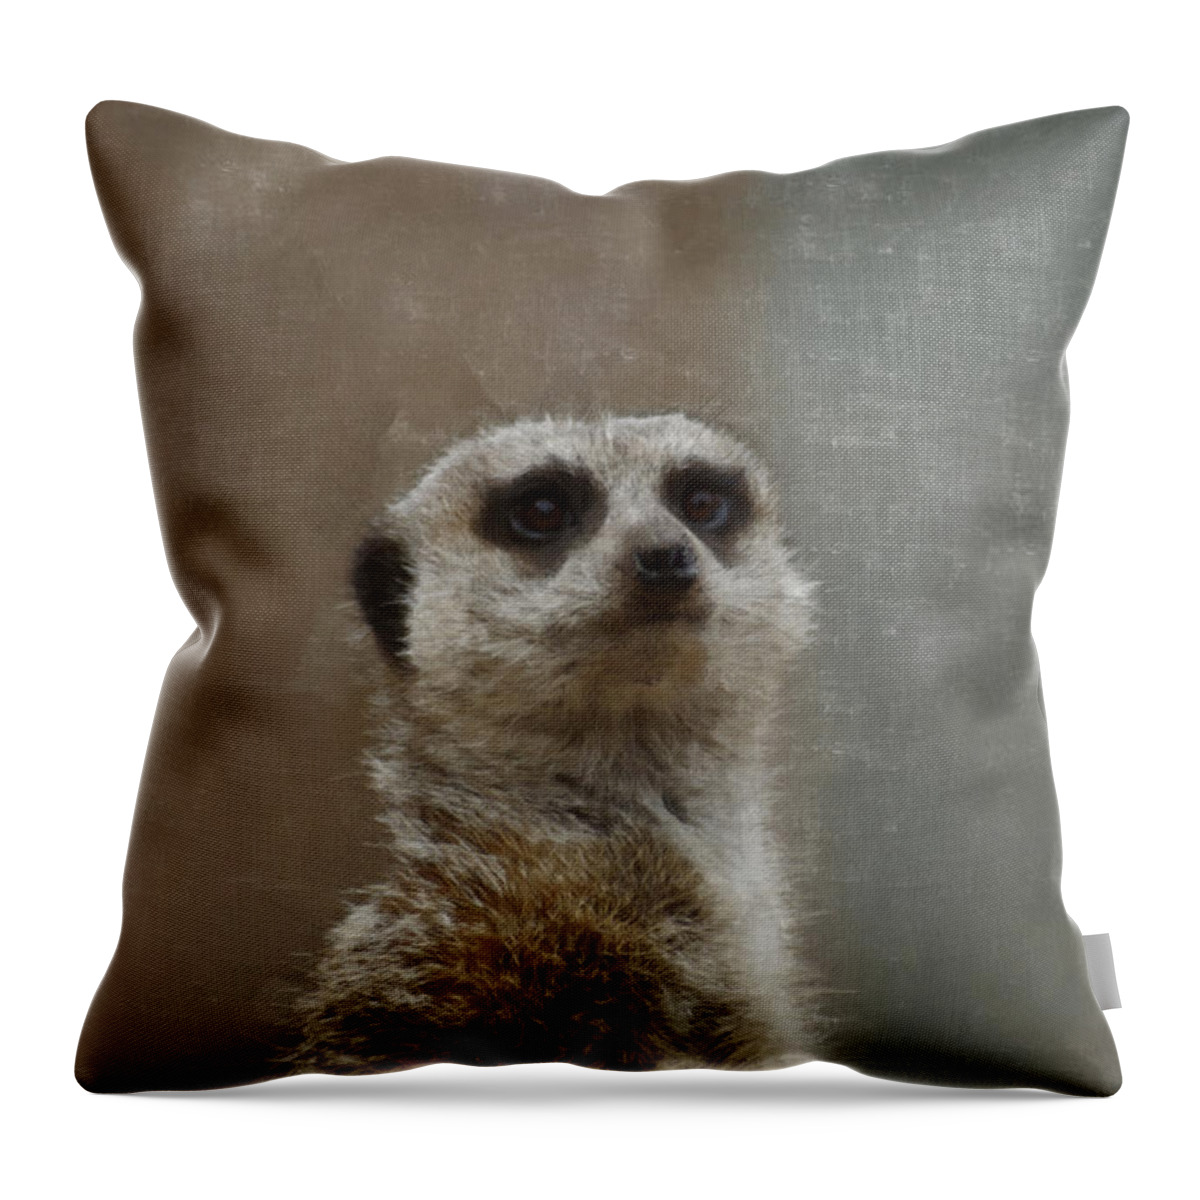 Meerkat Throw Pillow featuring the digital art Meerkat 5 by Ernest Echols